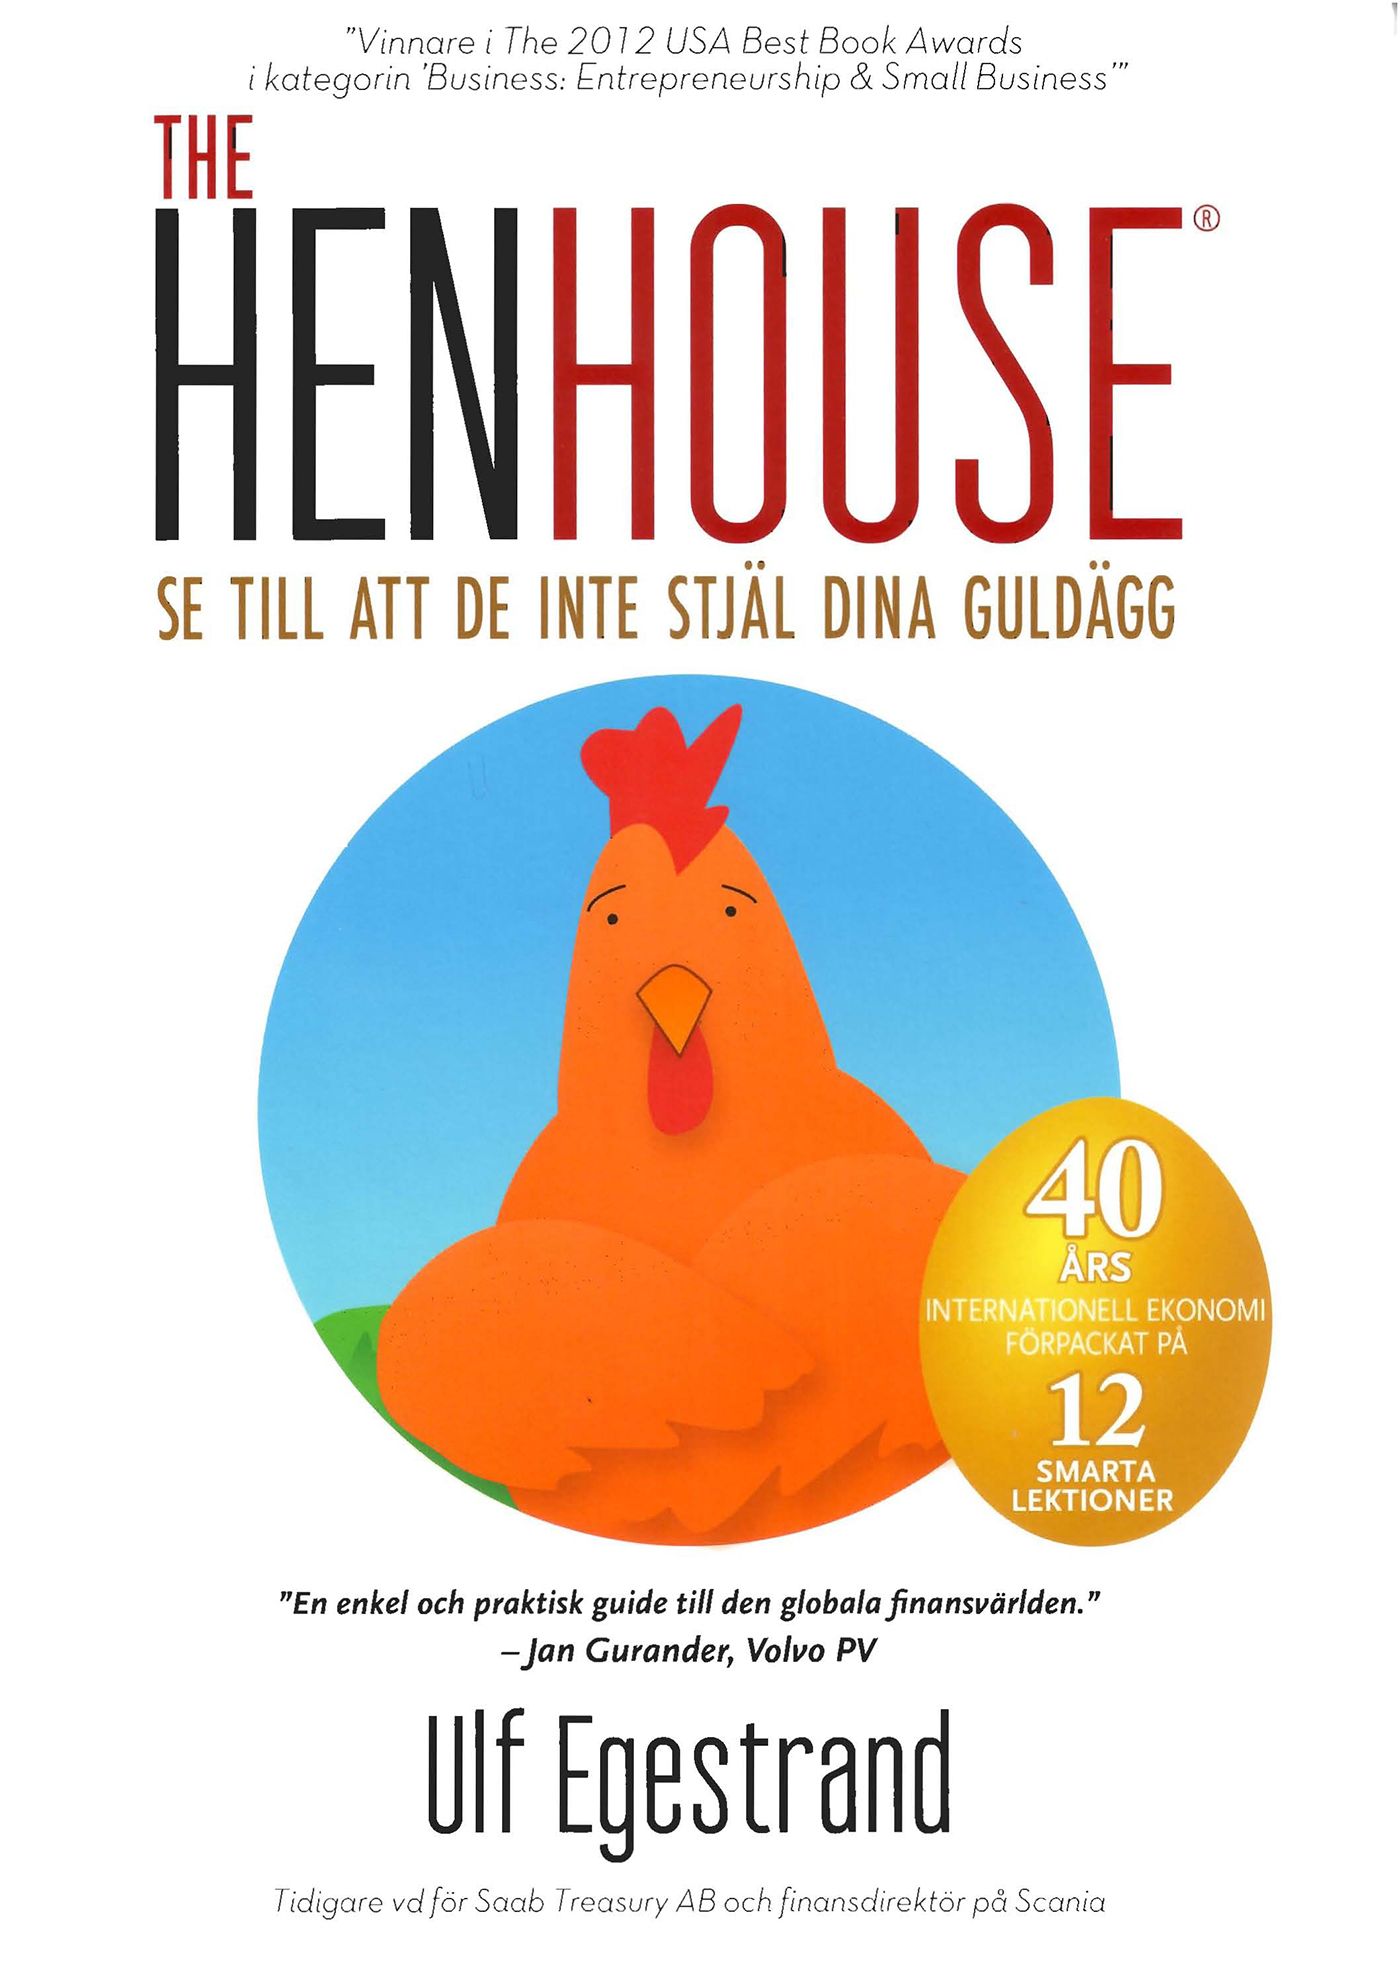 The HenHouse, eBook by Ulf Egestrand